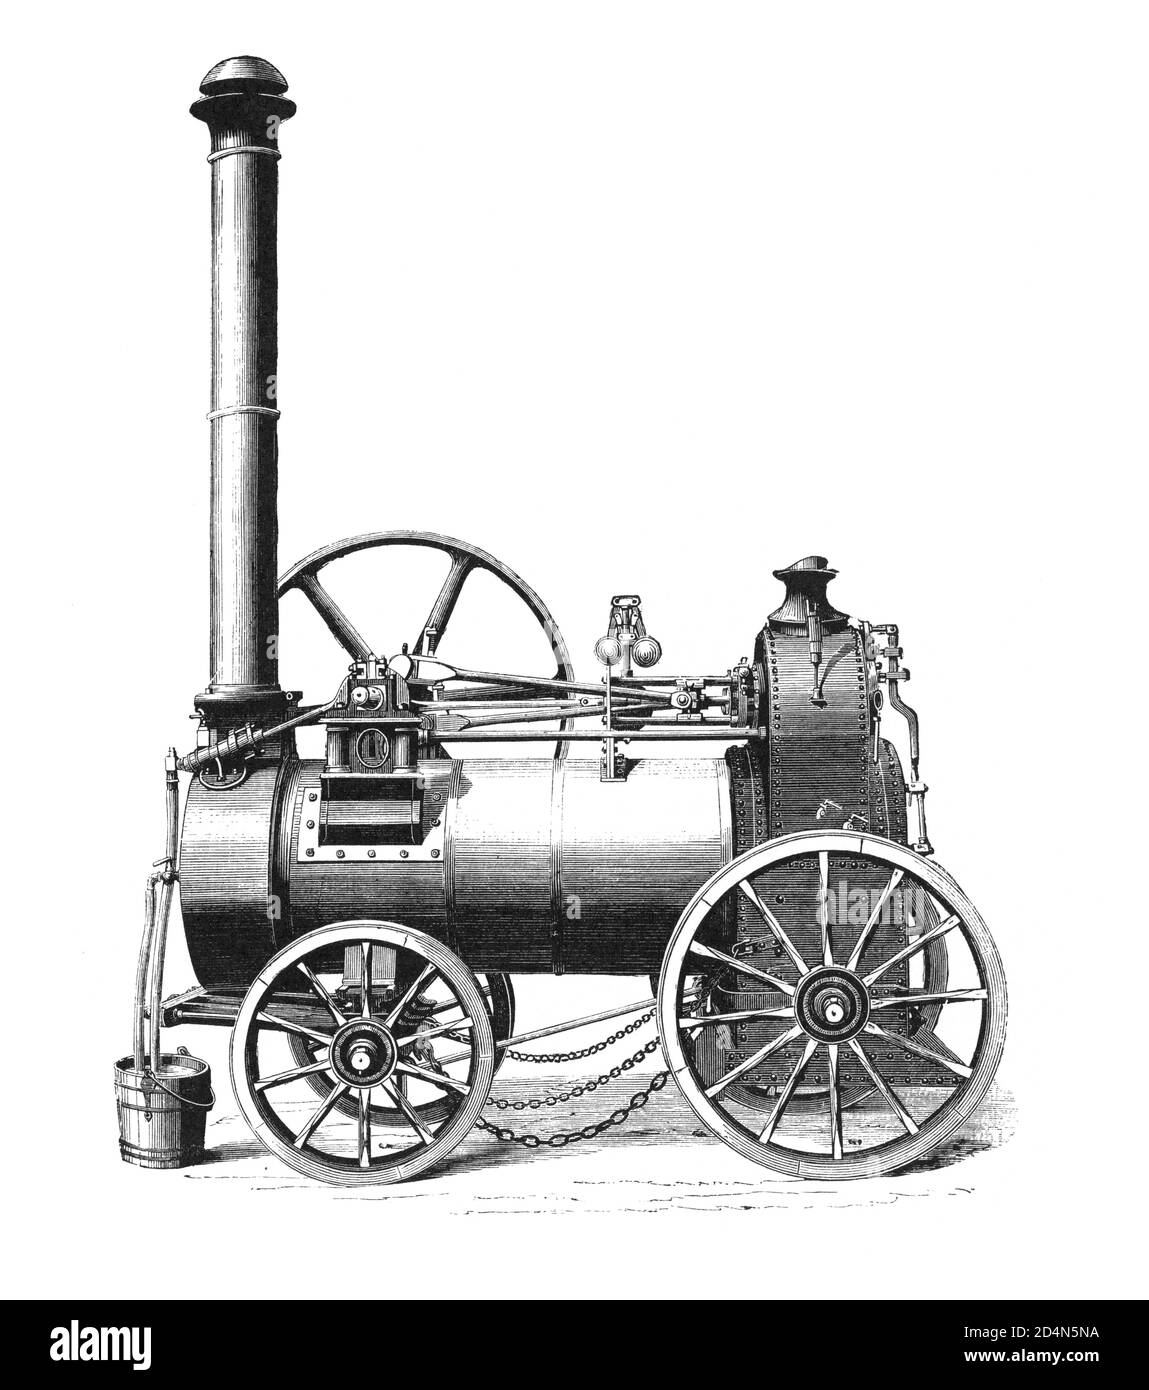 Maquina de vapor siglo xix Imágenes recortadas de stock - Alamy